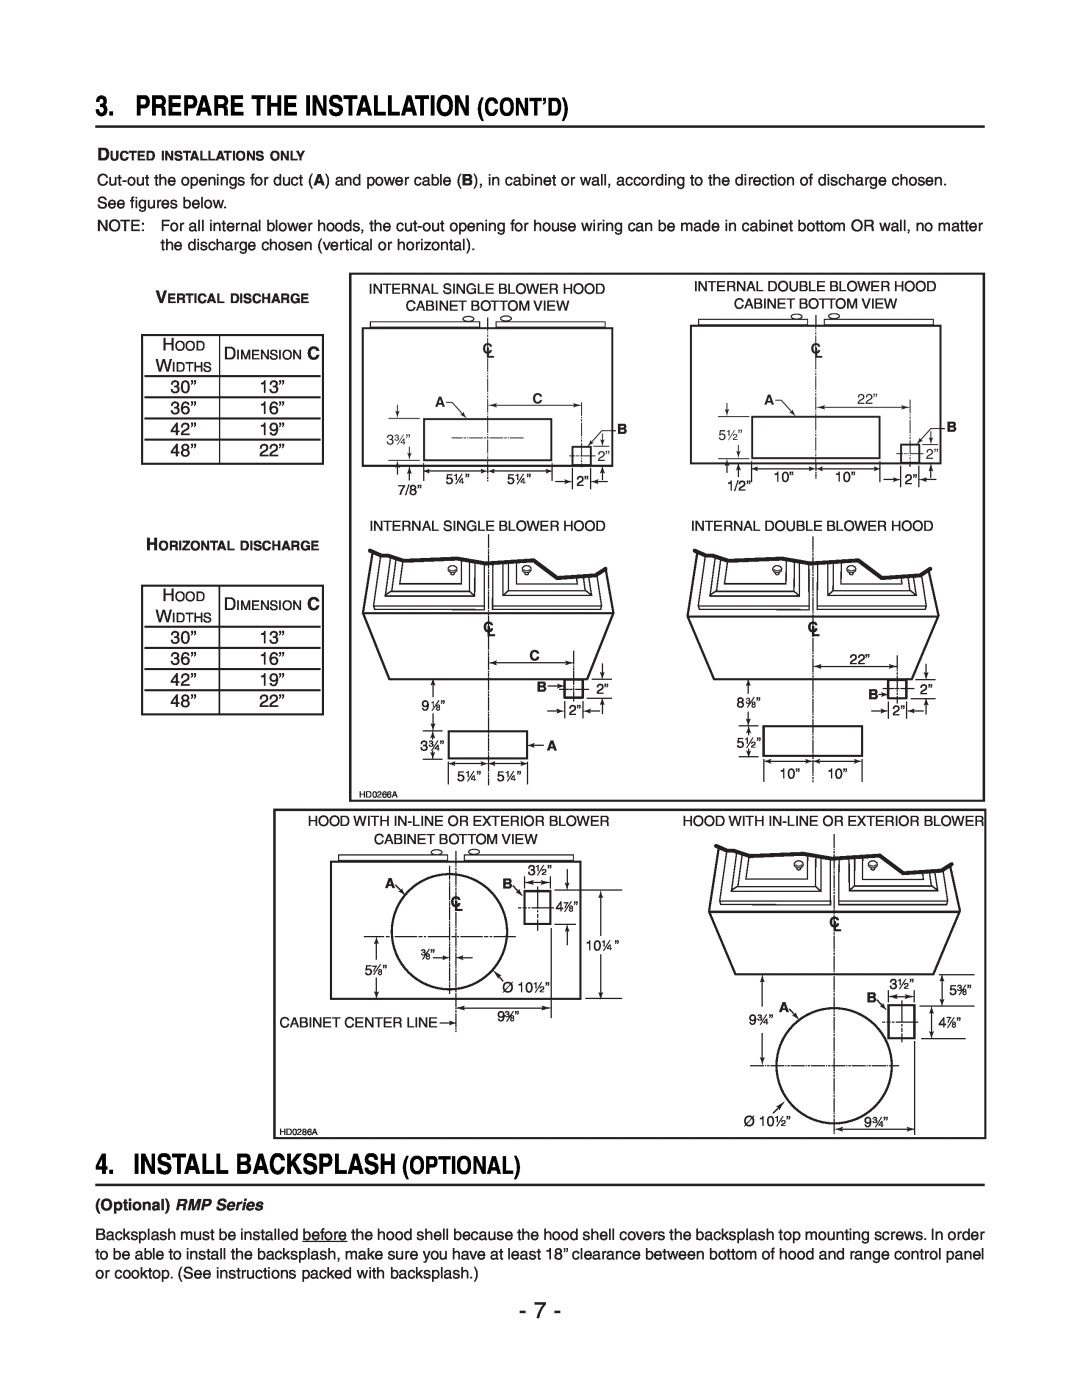 Broan E60000 Series Prepare The Installation Cont’D, Install Backsplash Optional, 30’’, 36’’, 42’’, 48’’ 